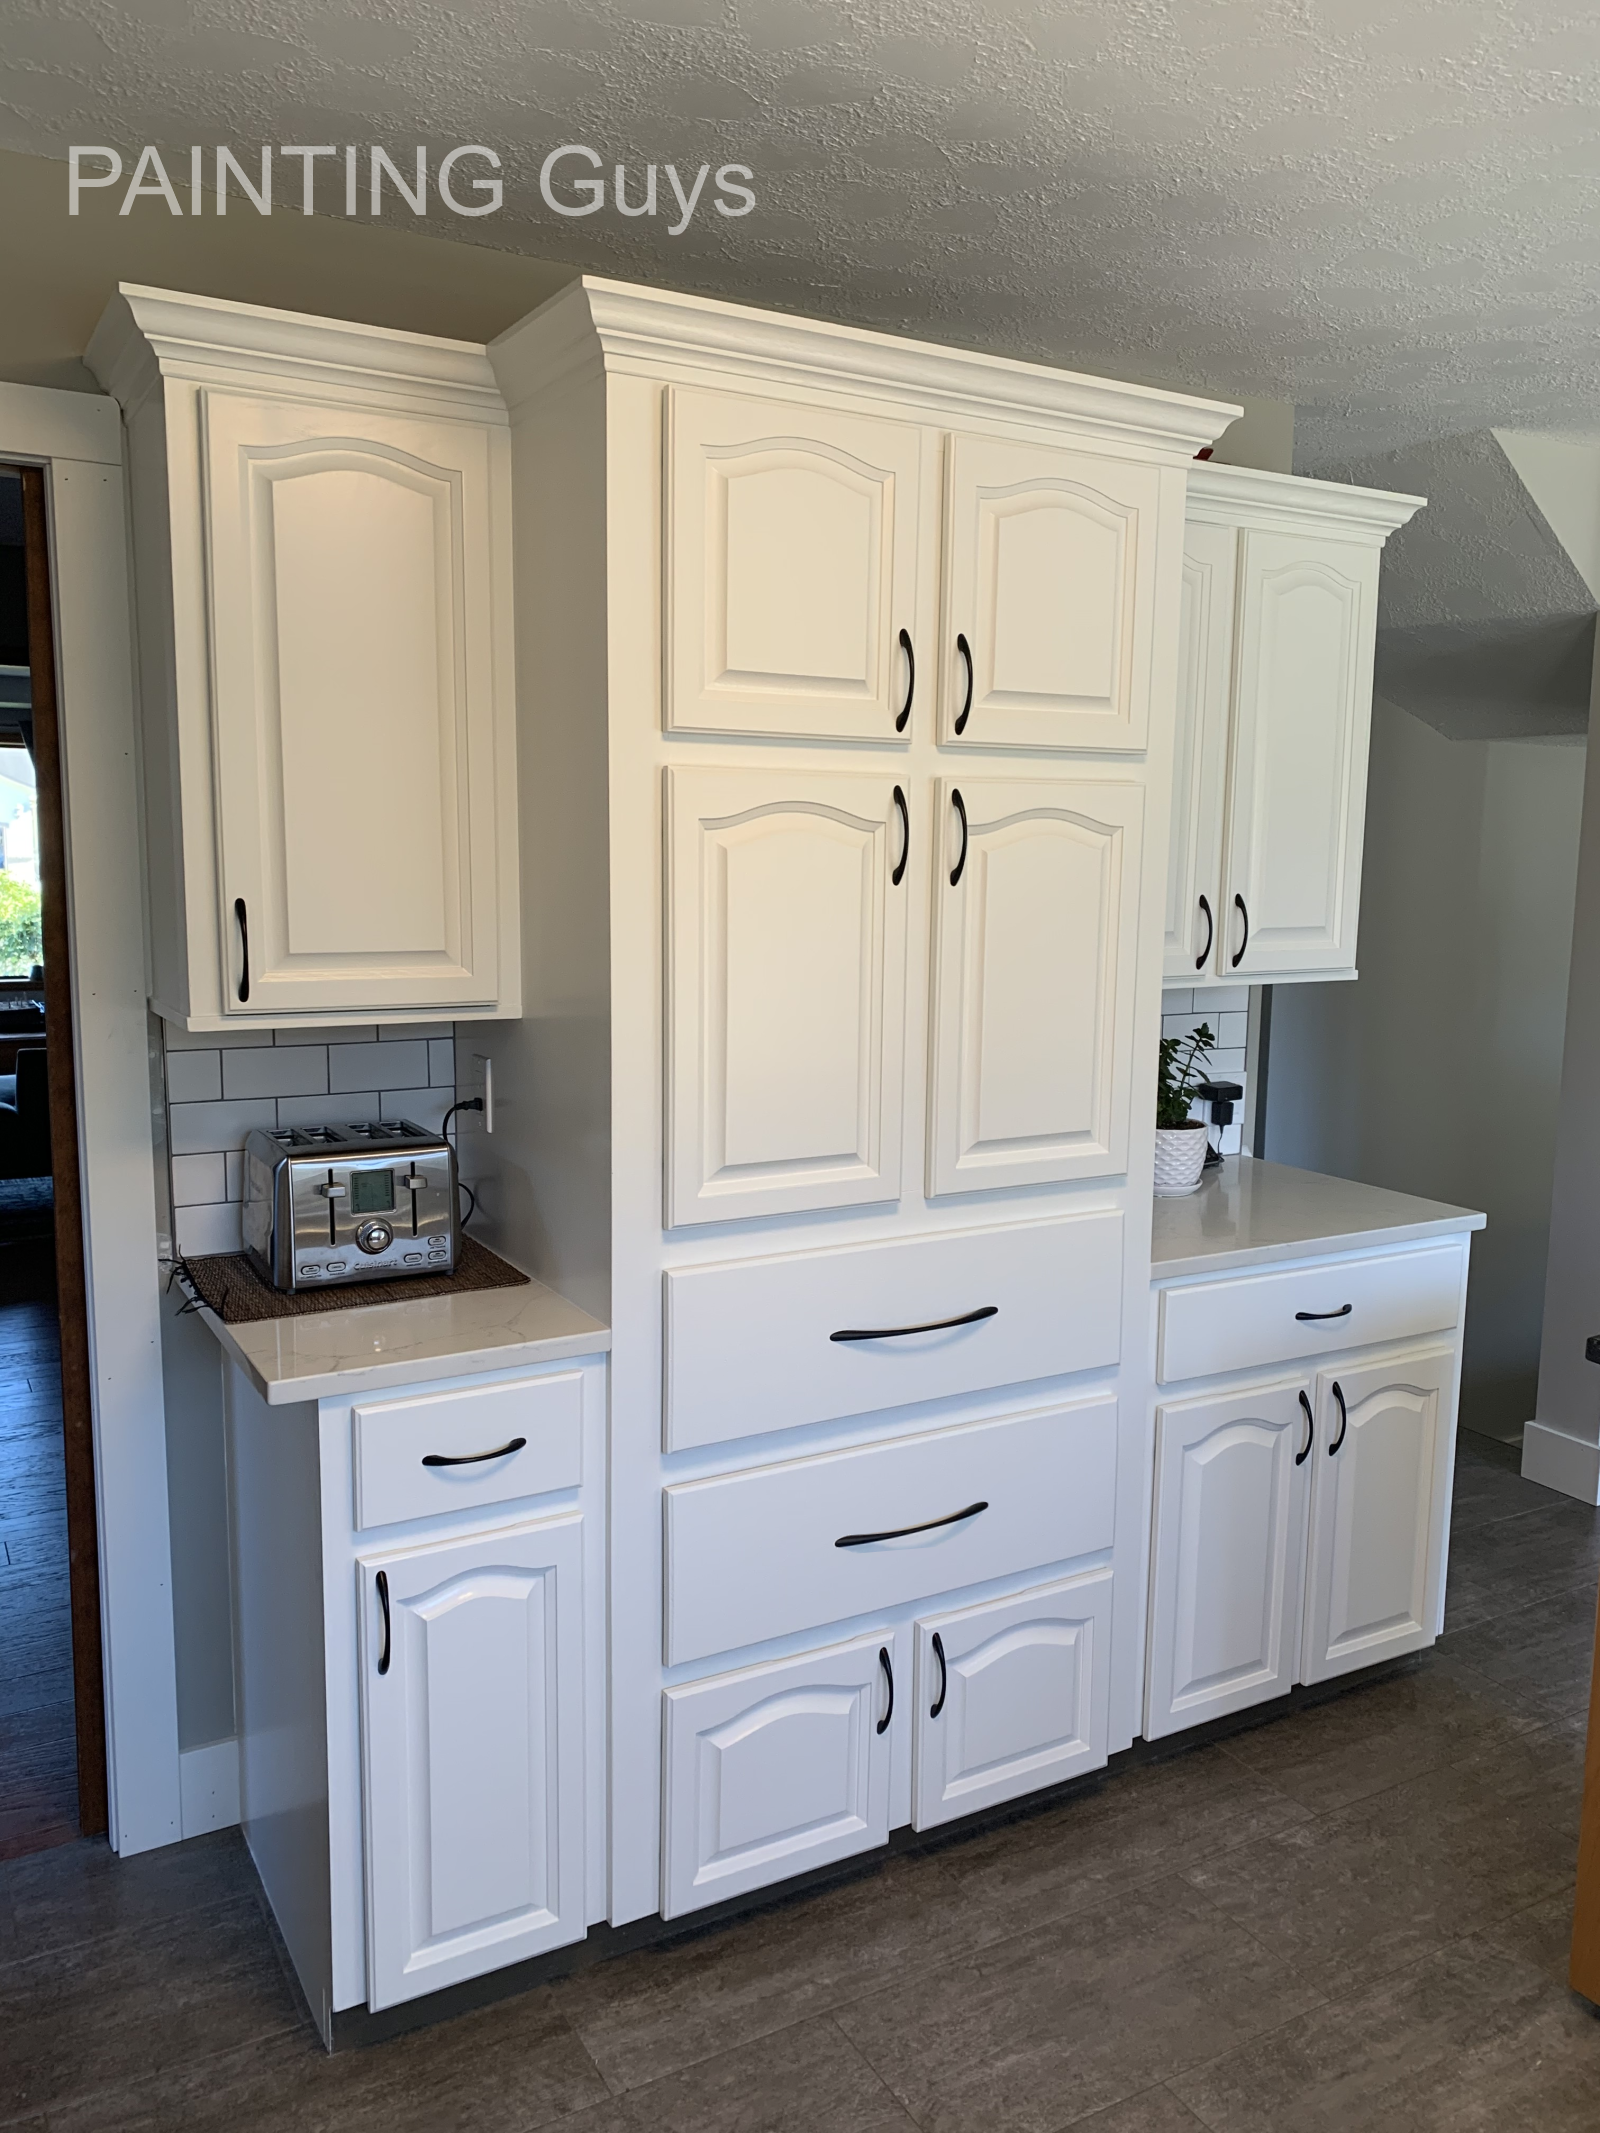 oak kitchen cabinet refinished in Cloud White